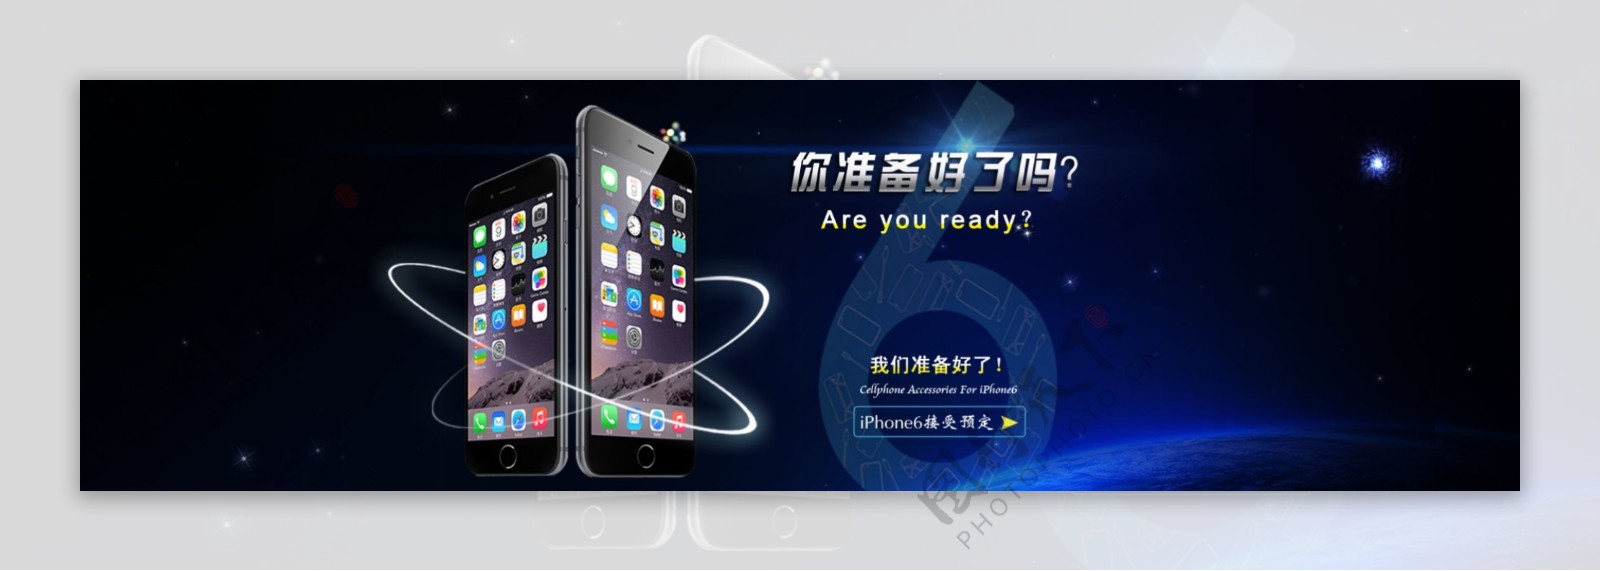 iphone6促销宣传